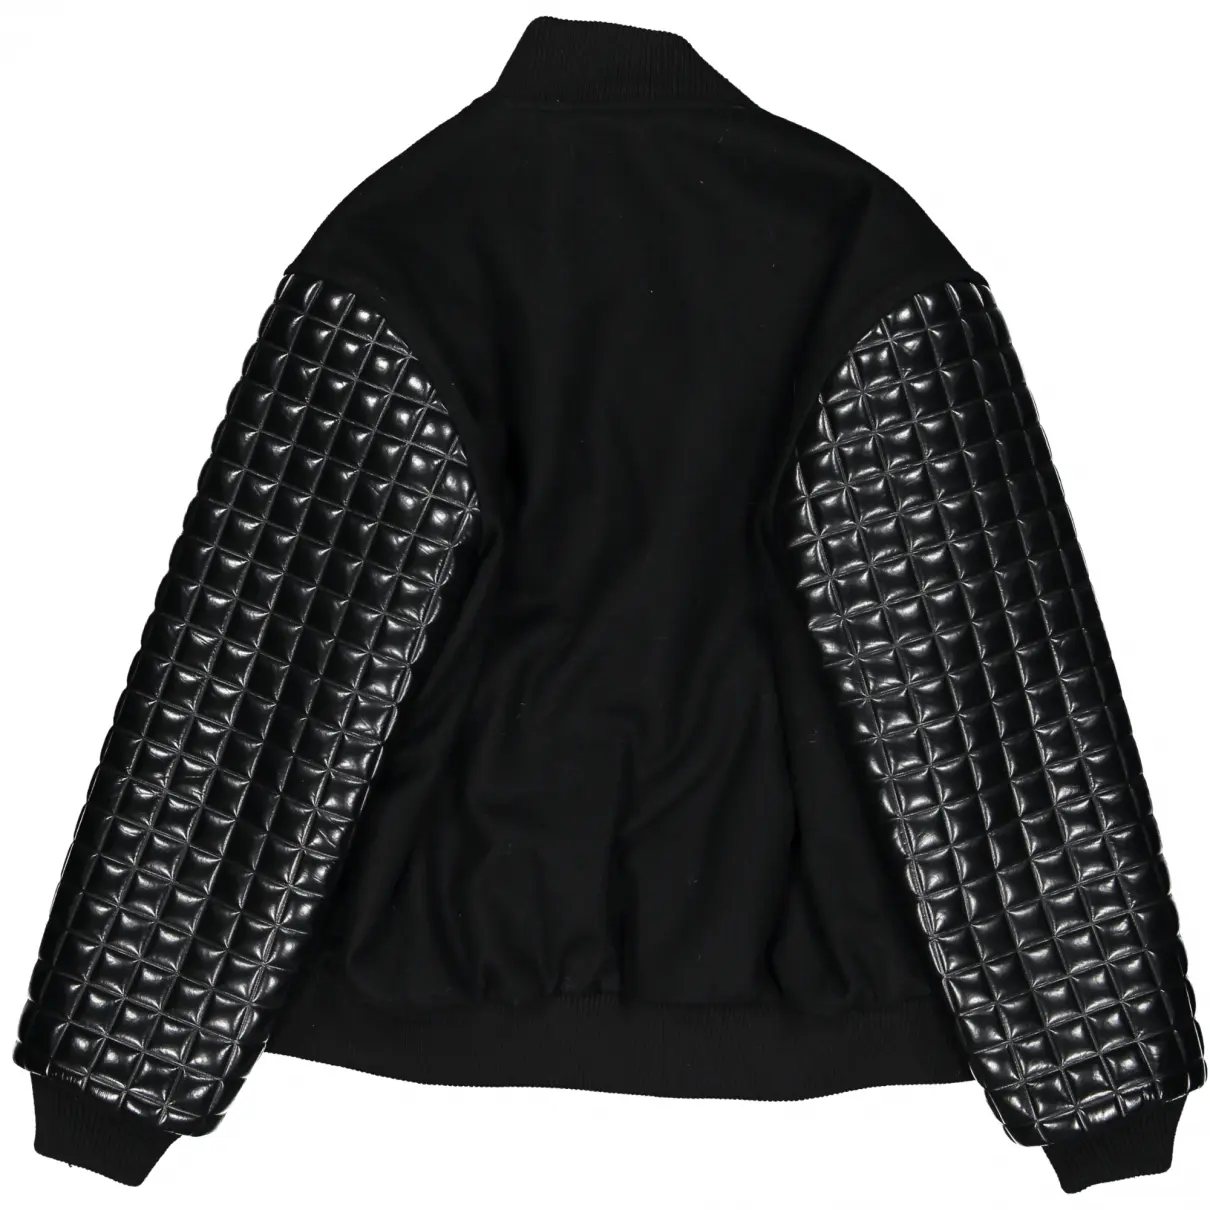 Wanda Nylon Wool jacket for sale